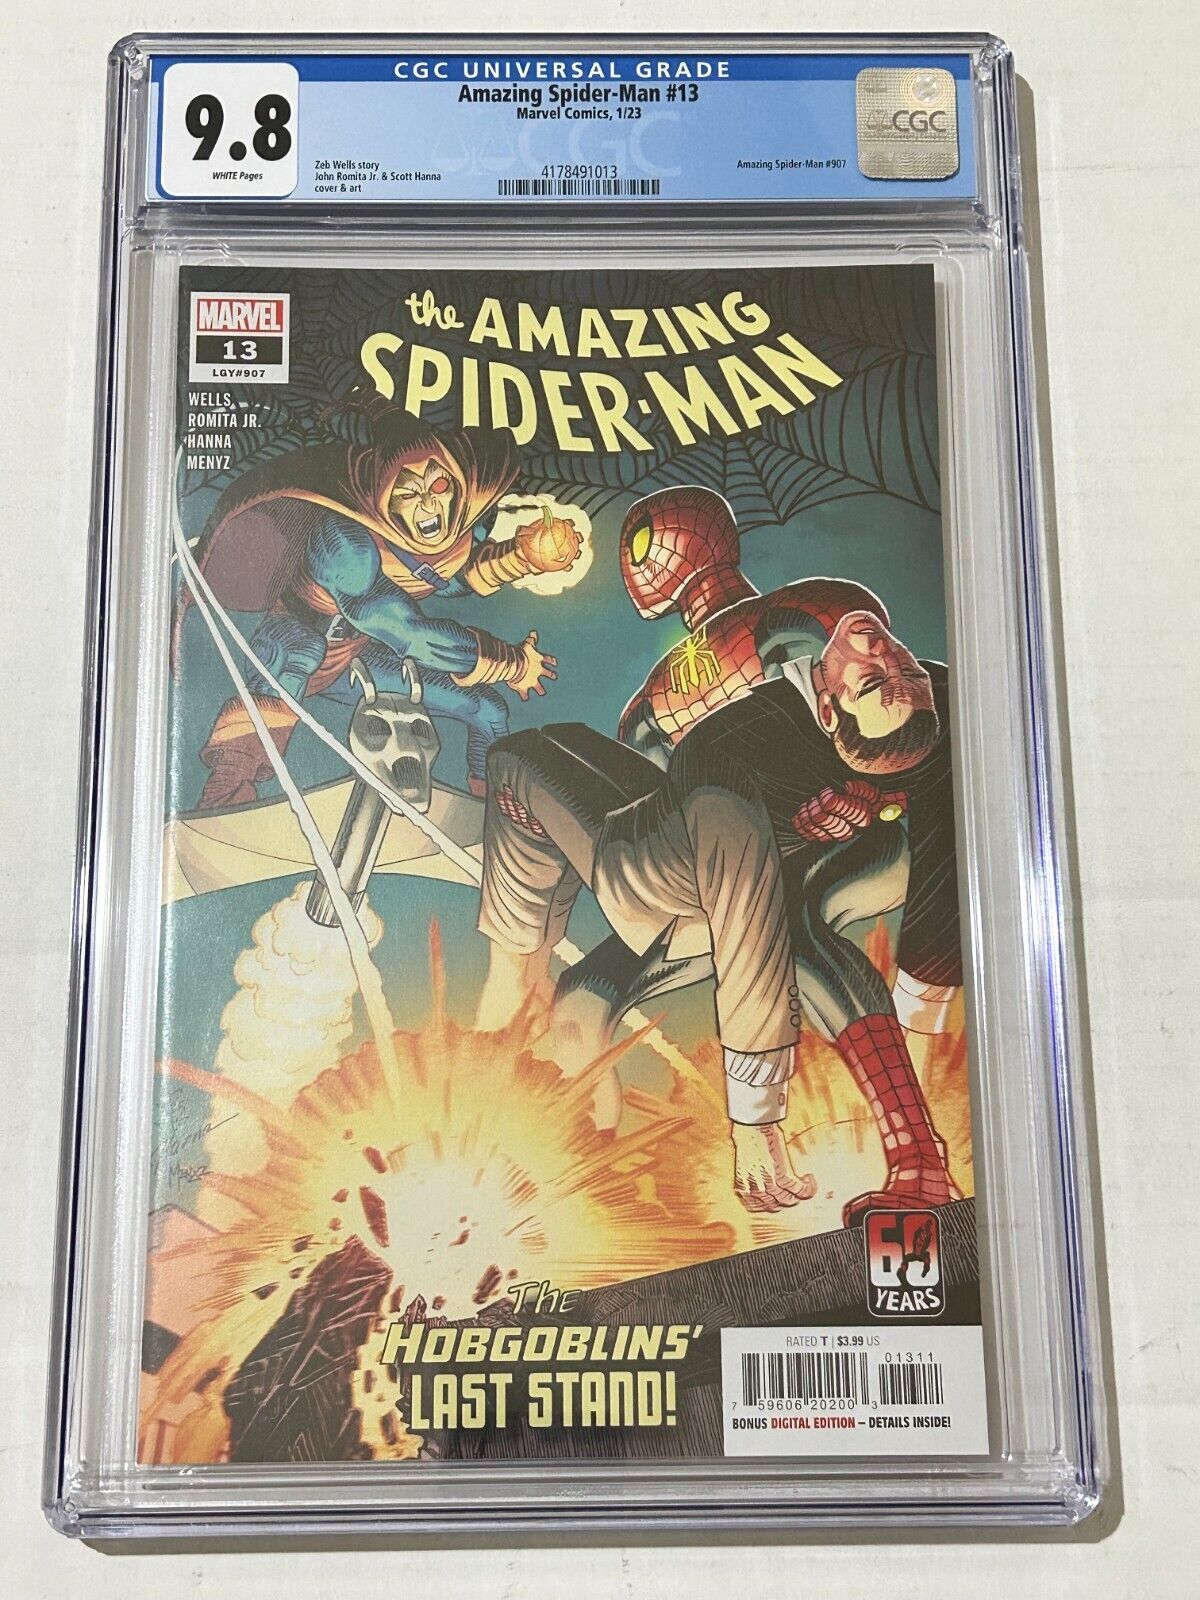 Amazing Spider-Man # 13 (1/23) CGC Graded Comic Book Main Cover 9.8 NM/M